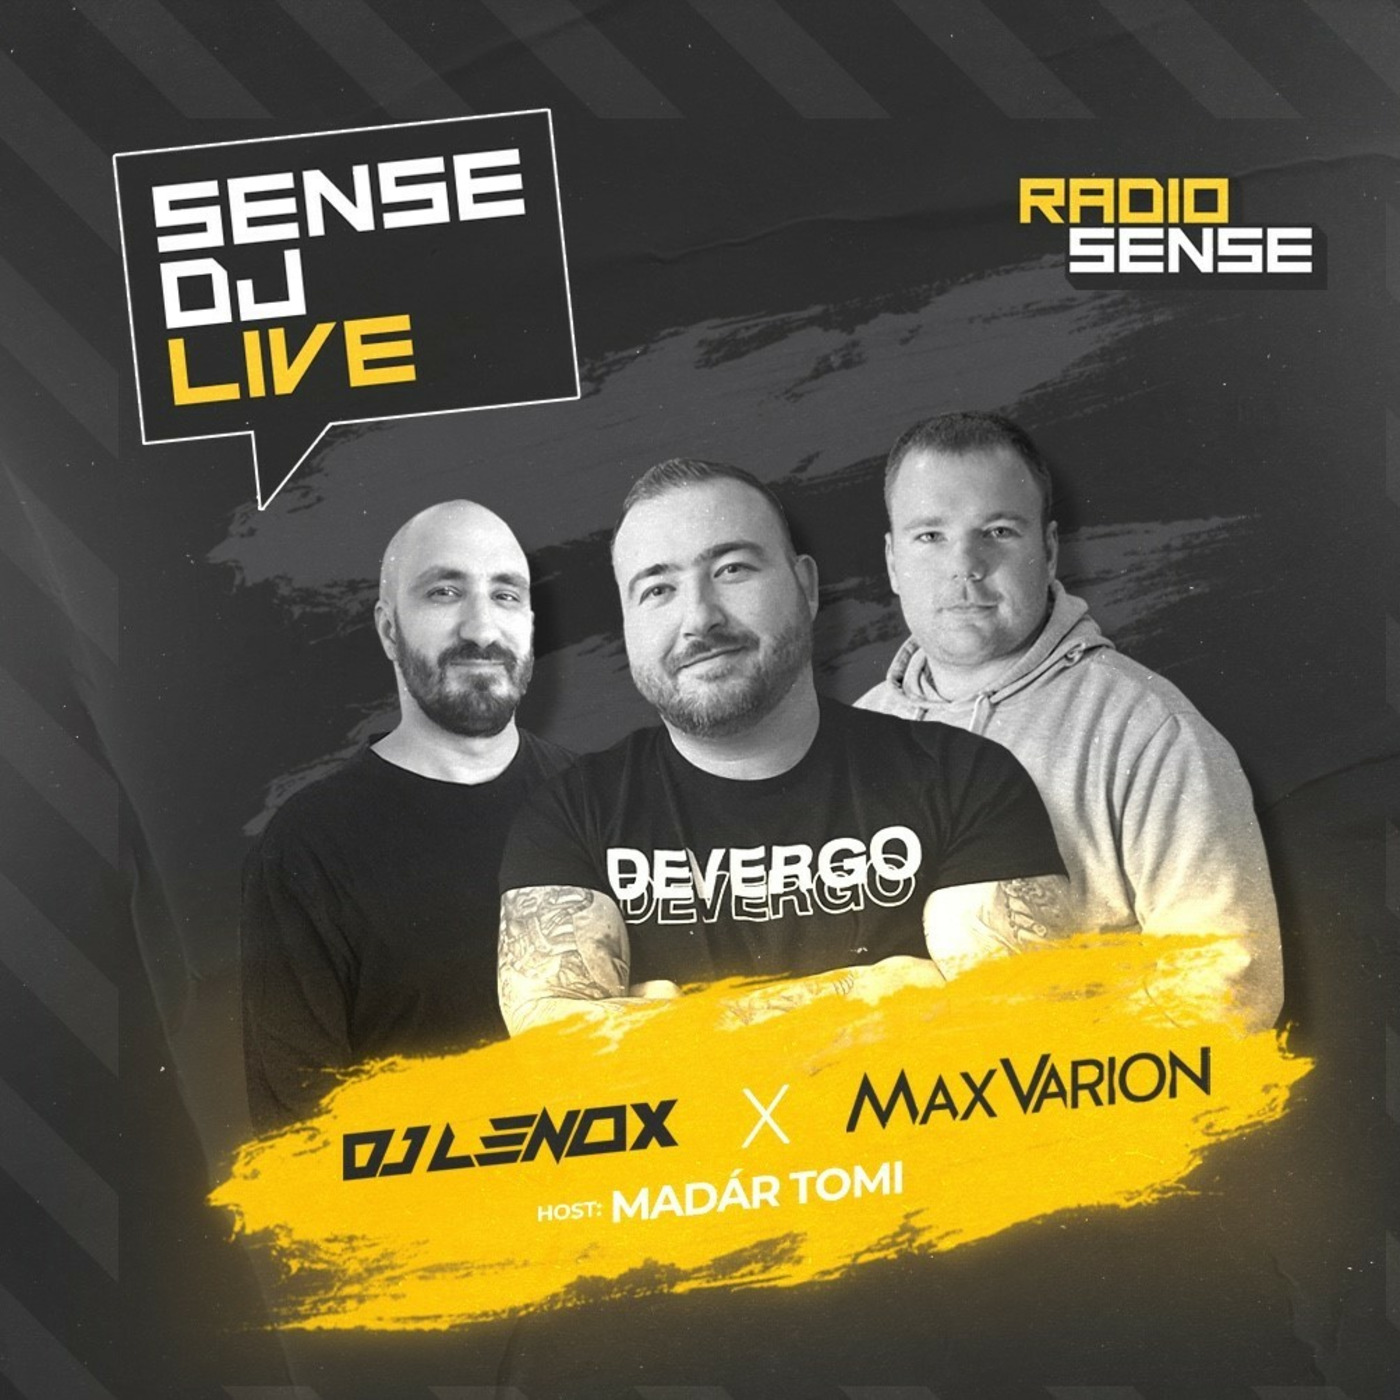 SenseDj LIVE -MAXVARION x DJ LENOX Host. Madár Tomi @ Radio Sense 2024.04.04